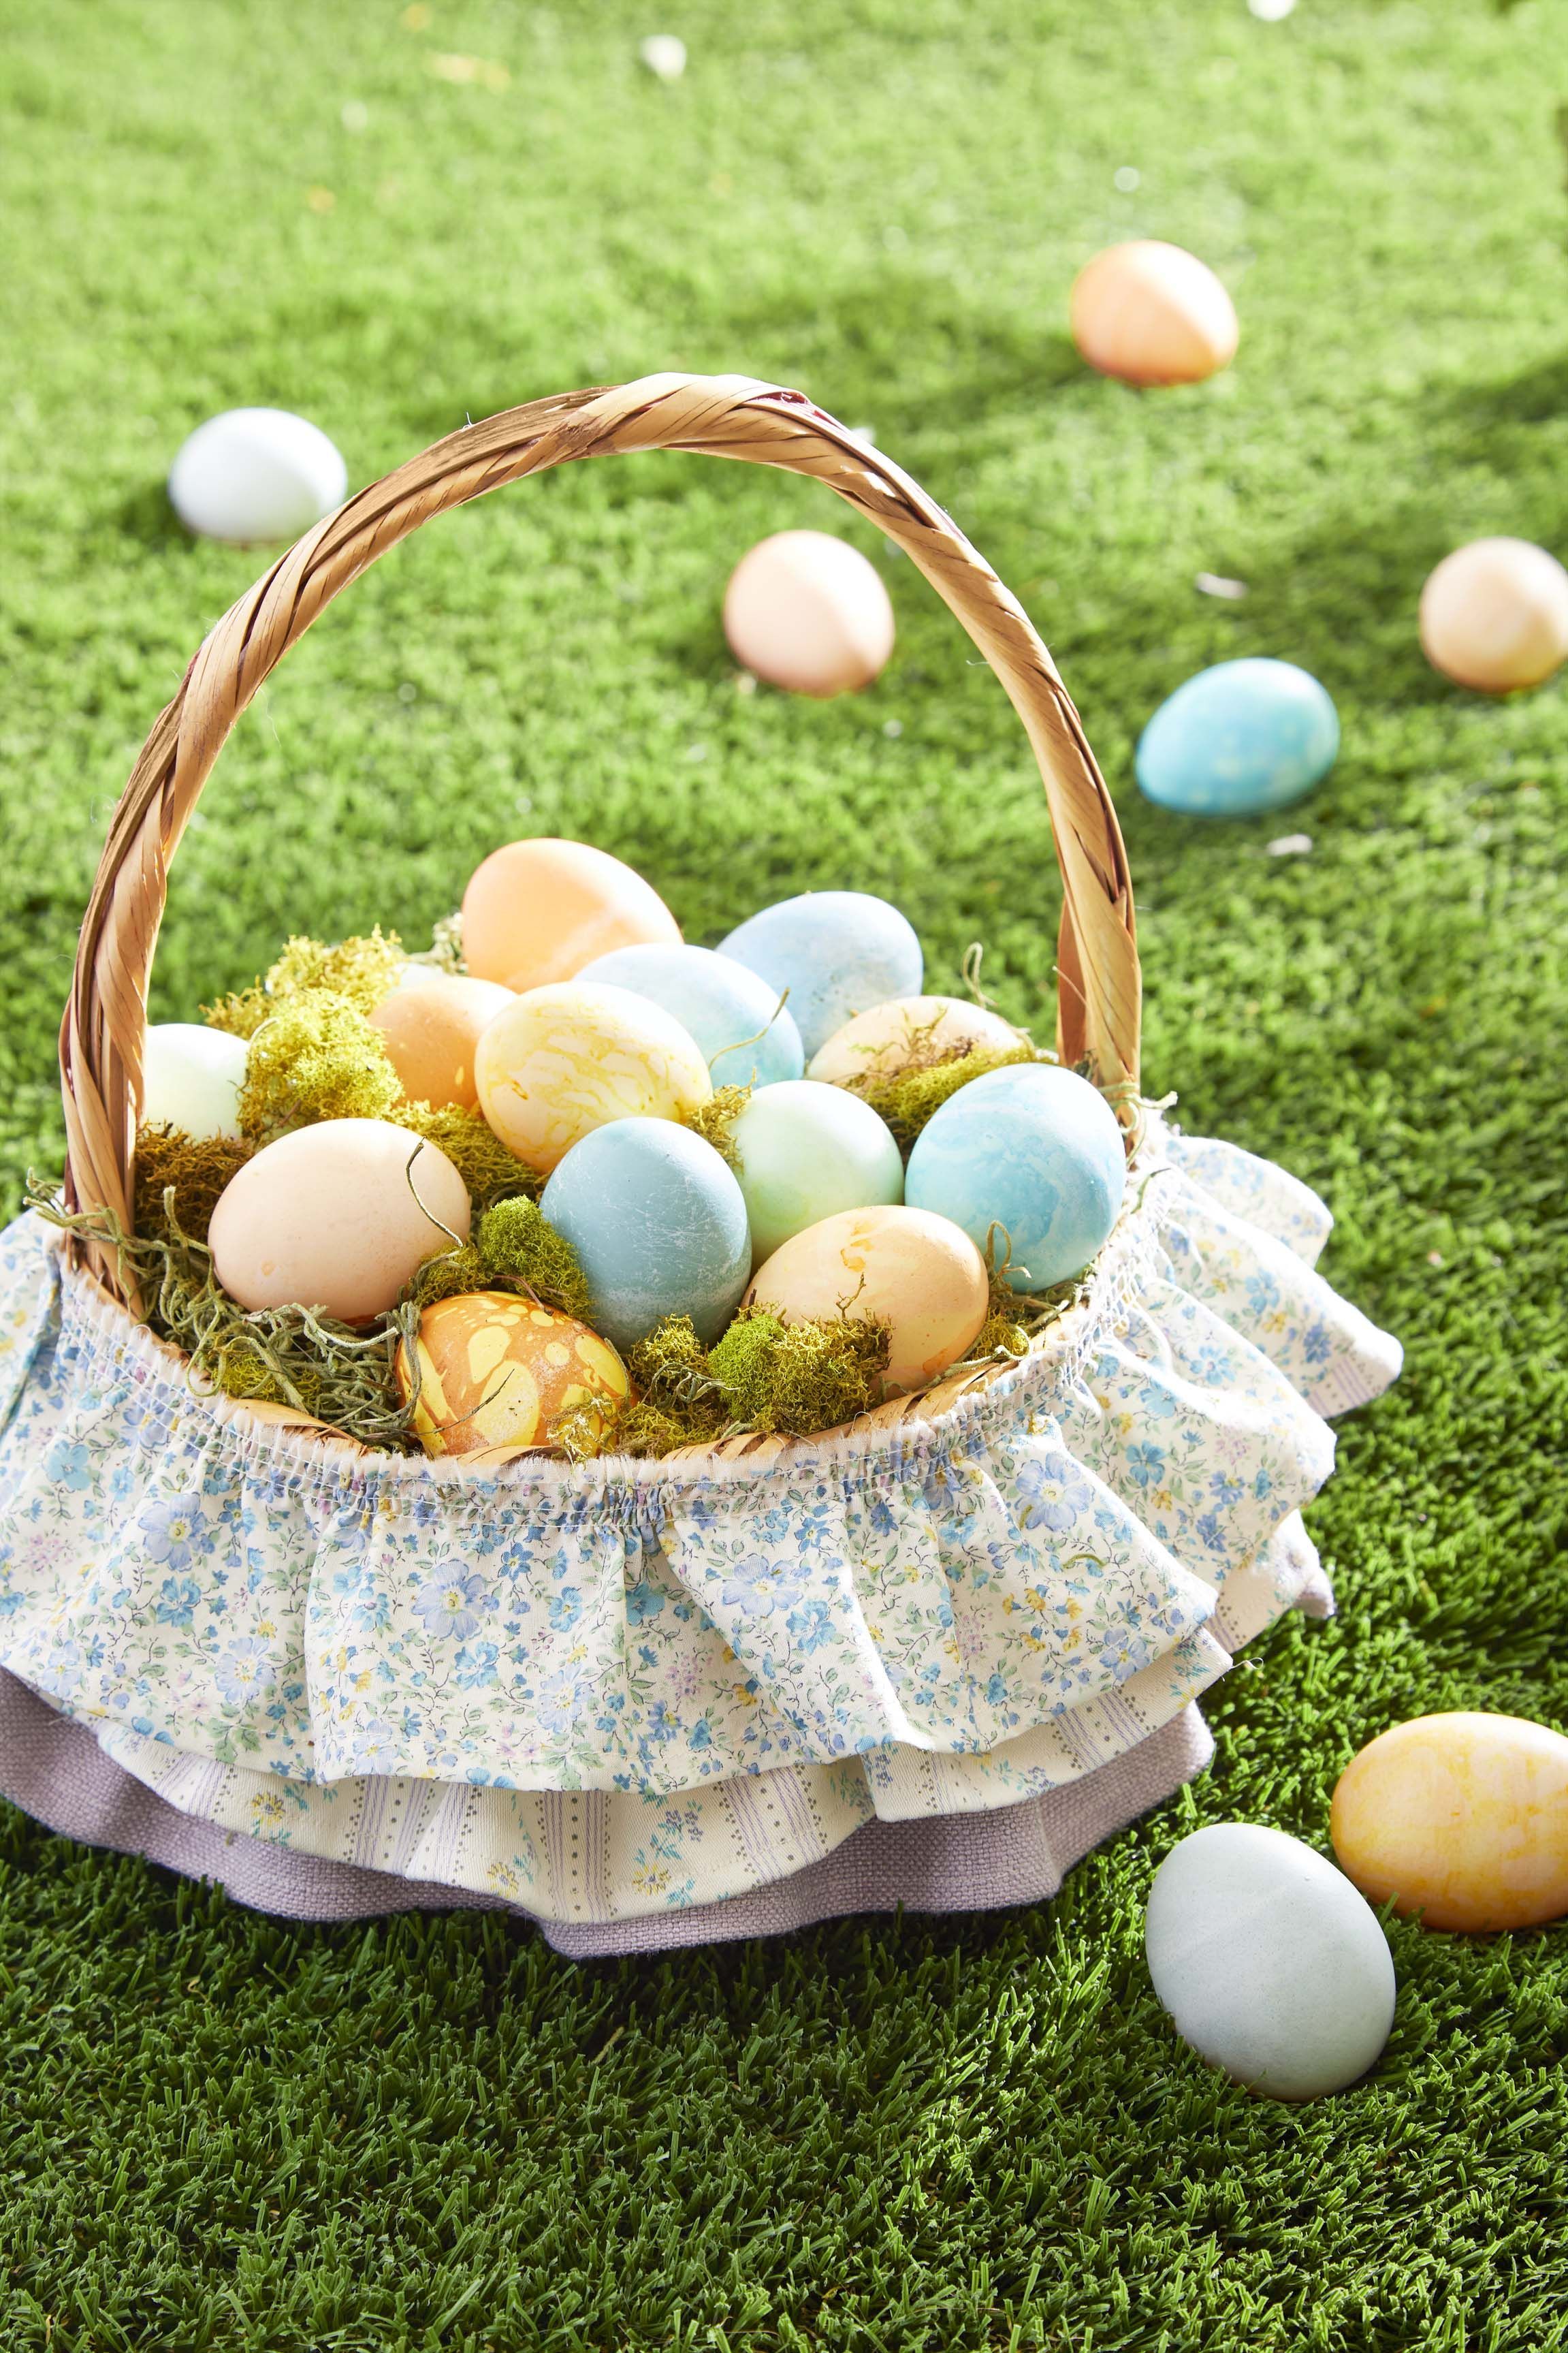 38 Best Easter Basket Ideas - DIY Easter Baskets for Kids and Adults